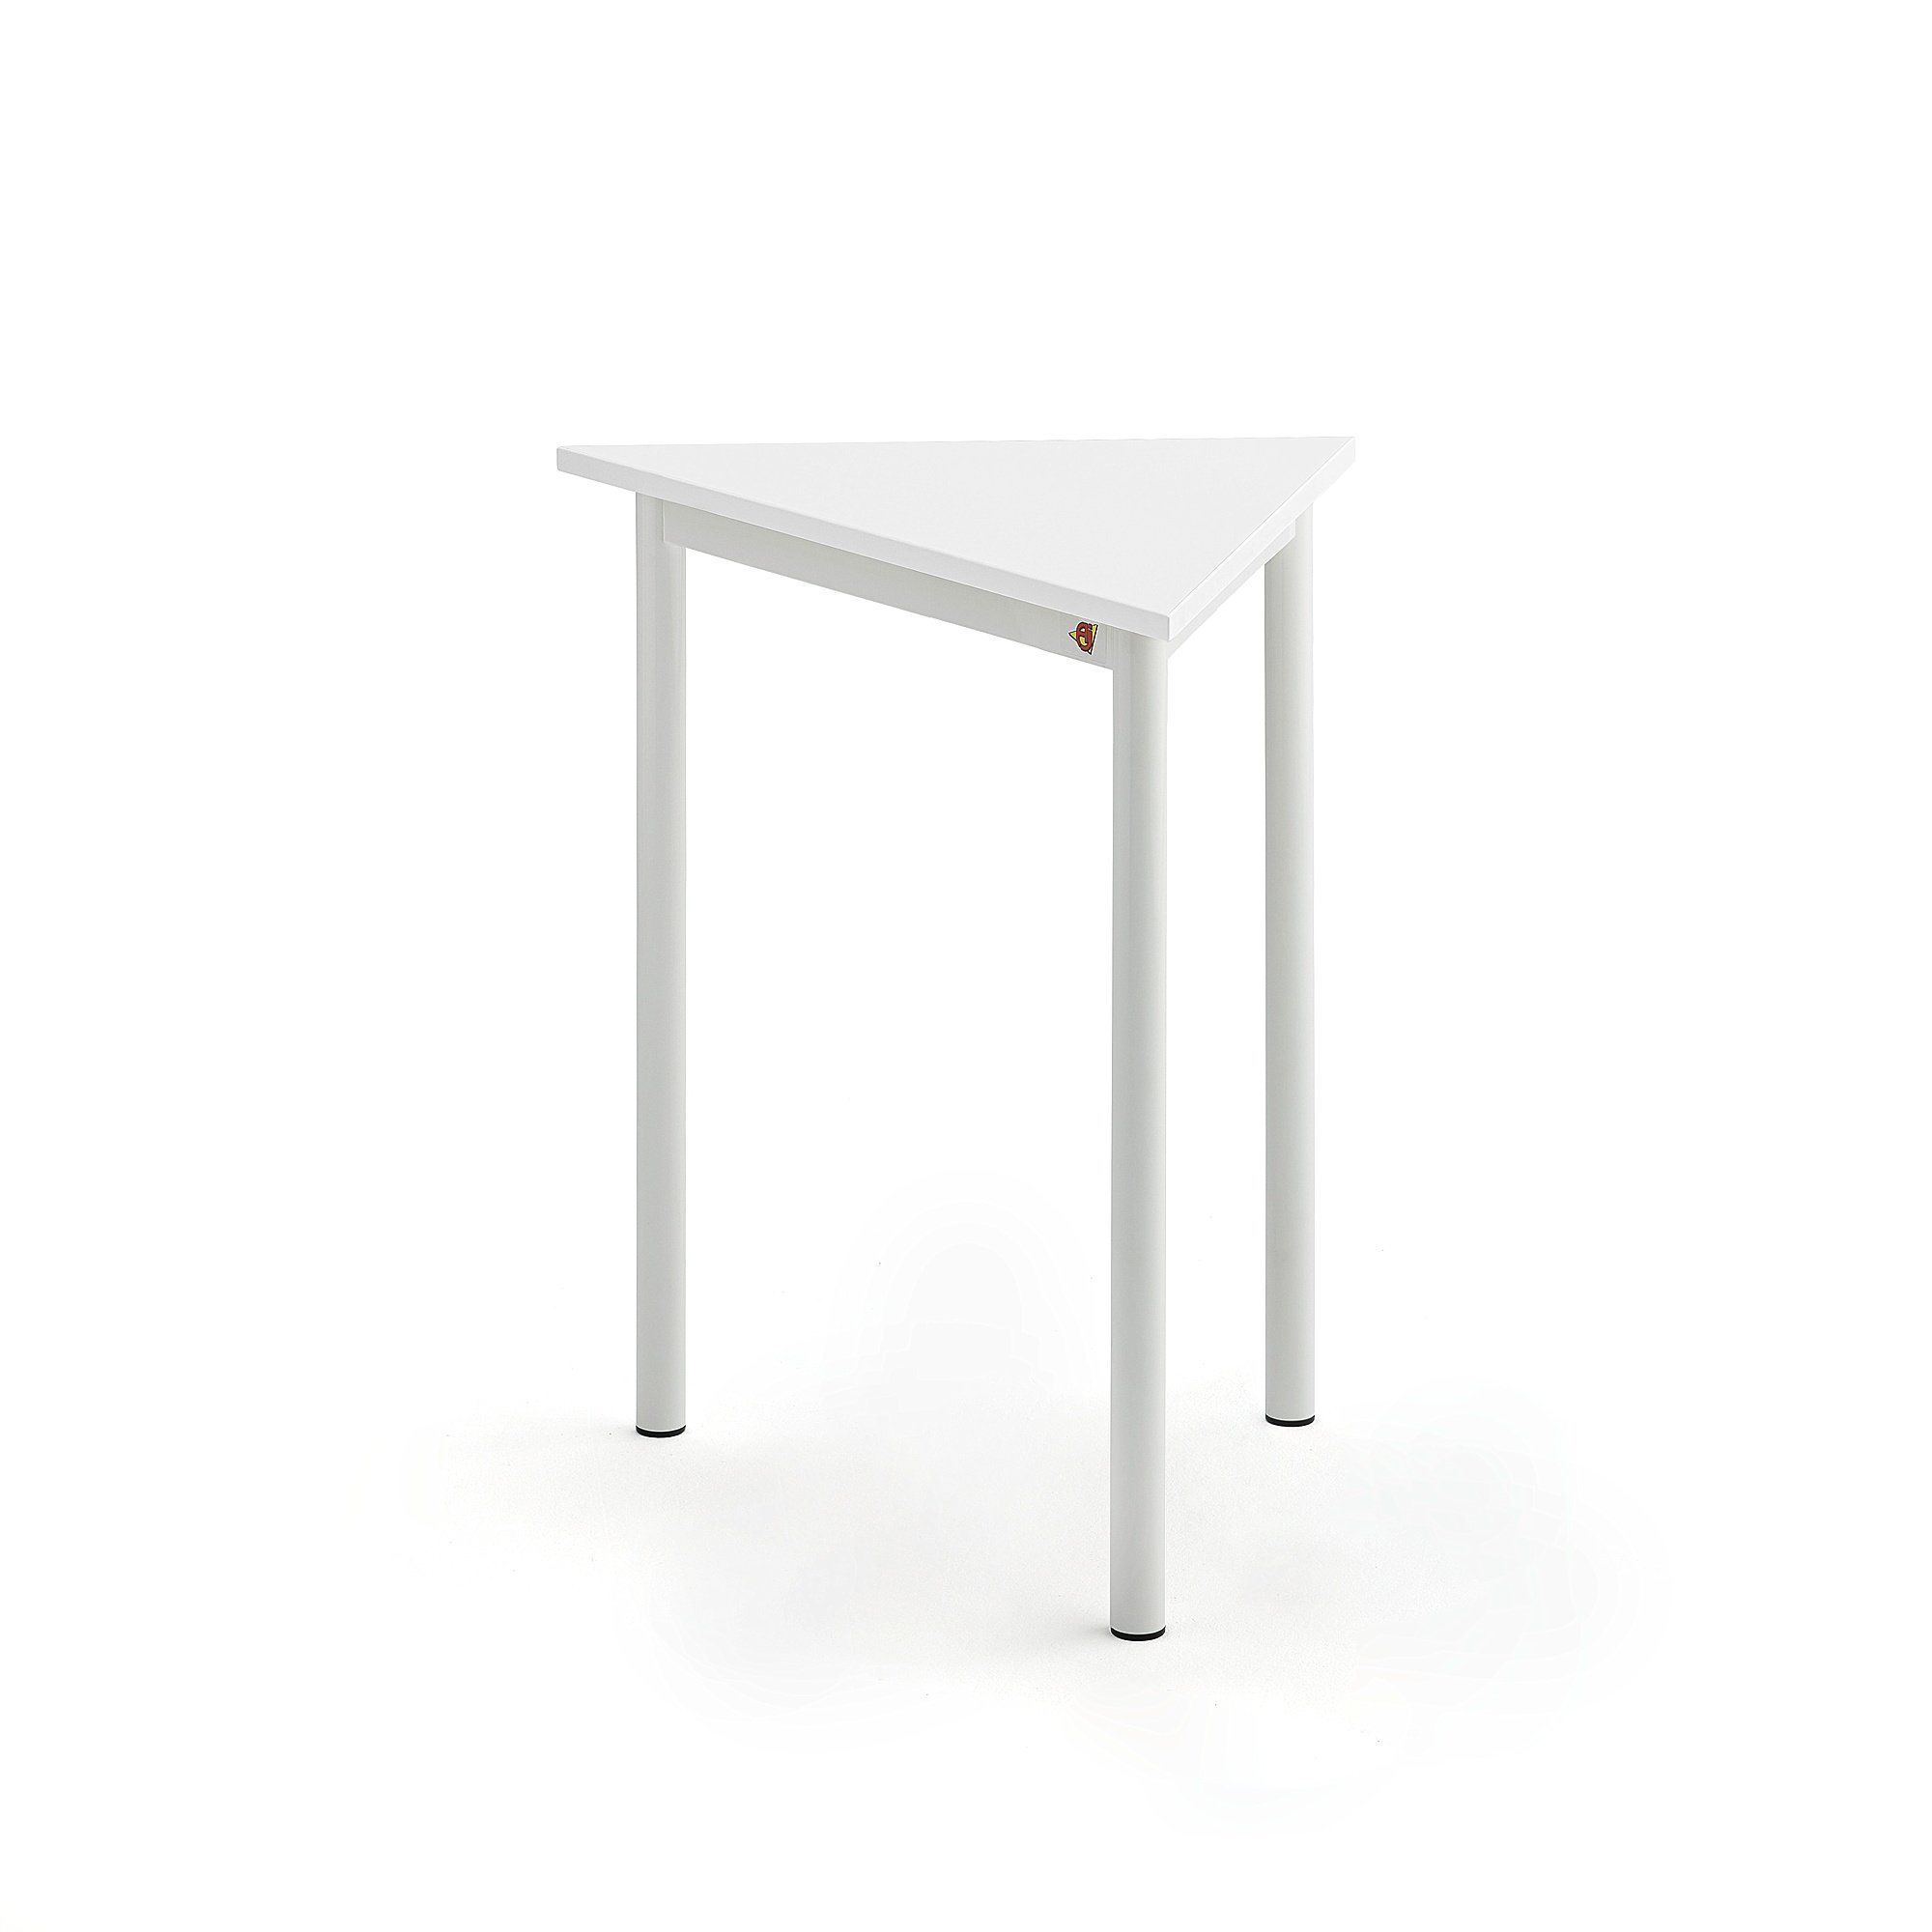 Stůl SONITUS TRIANGEL, 700x600x720 mm, bílé nohy, HPL deska tlumící hluk, bílá